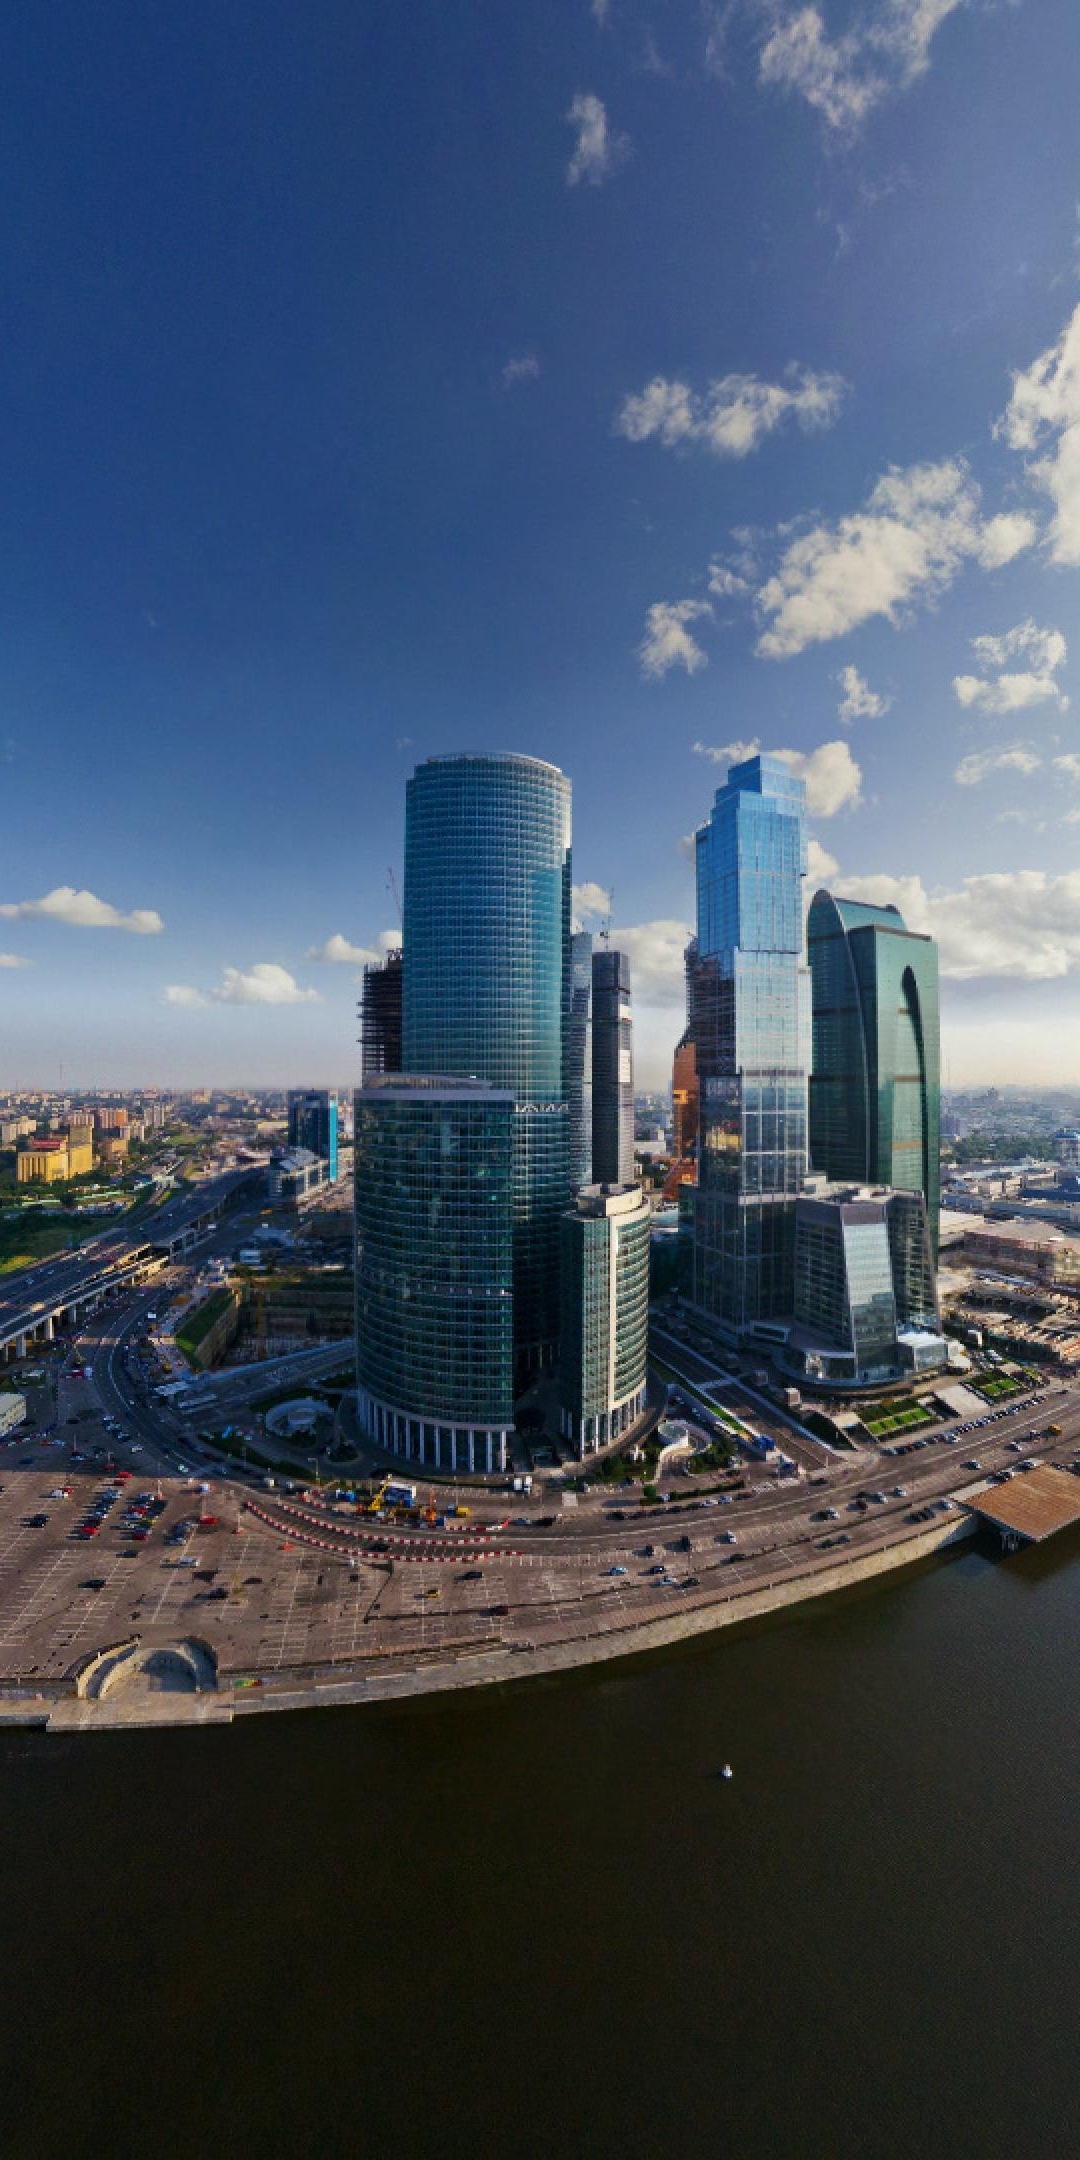 Картинка: Москва, город, центр, река, мост, здания, высотки, небо, облака, панорама